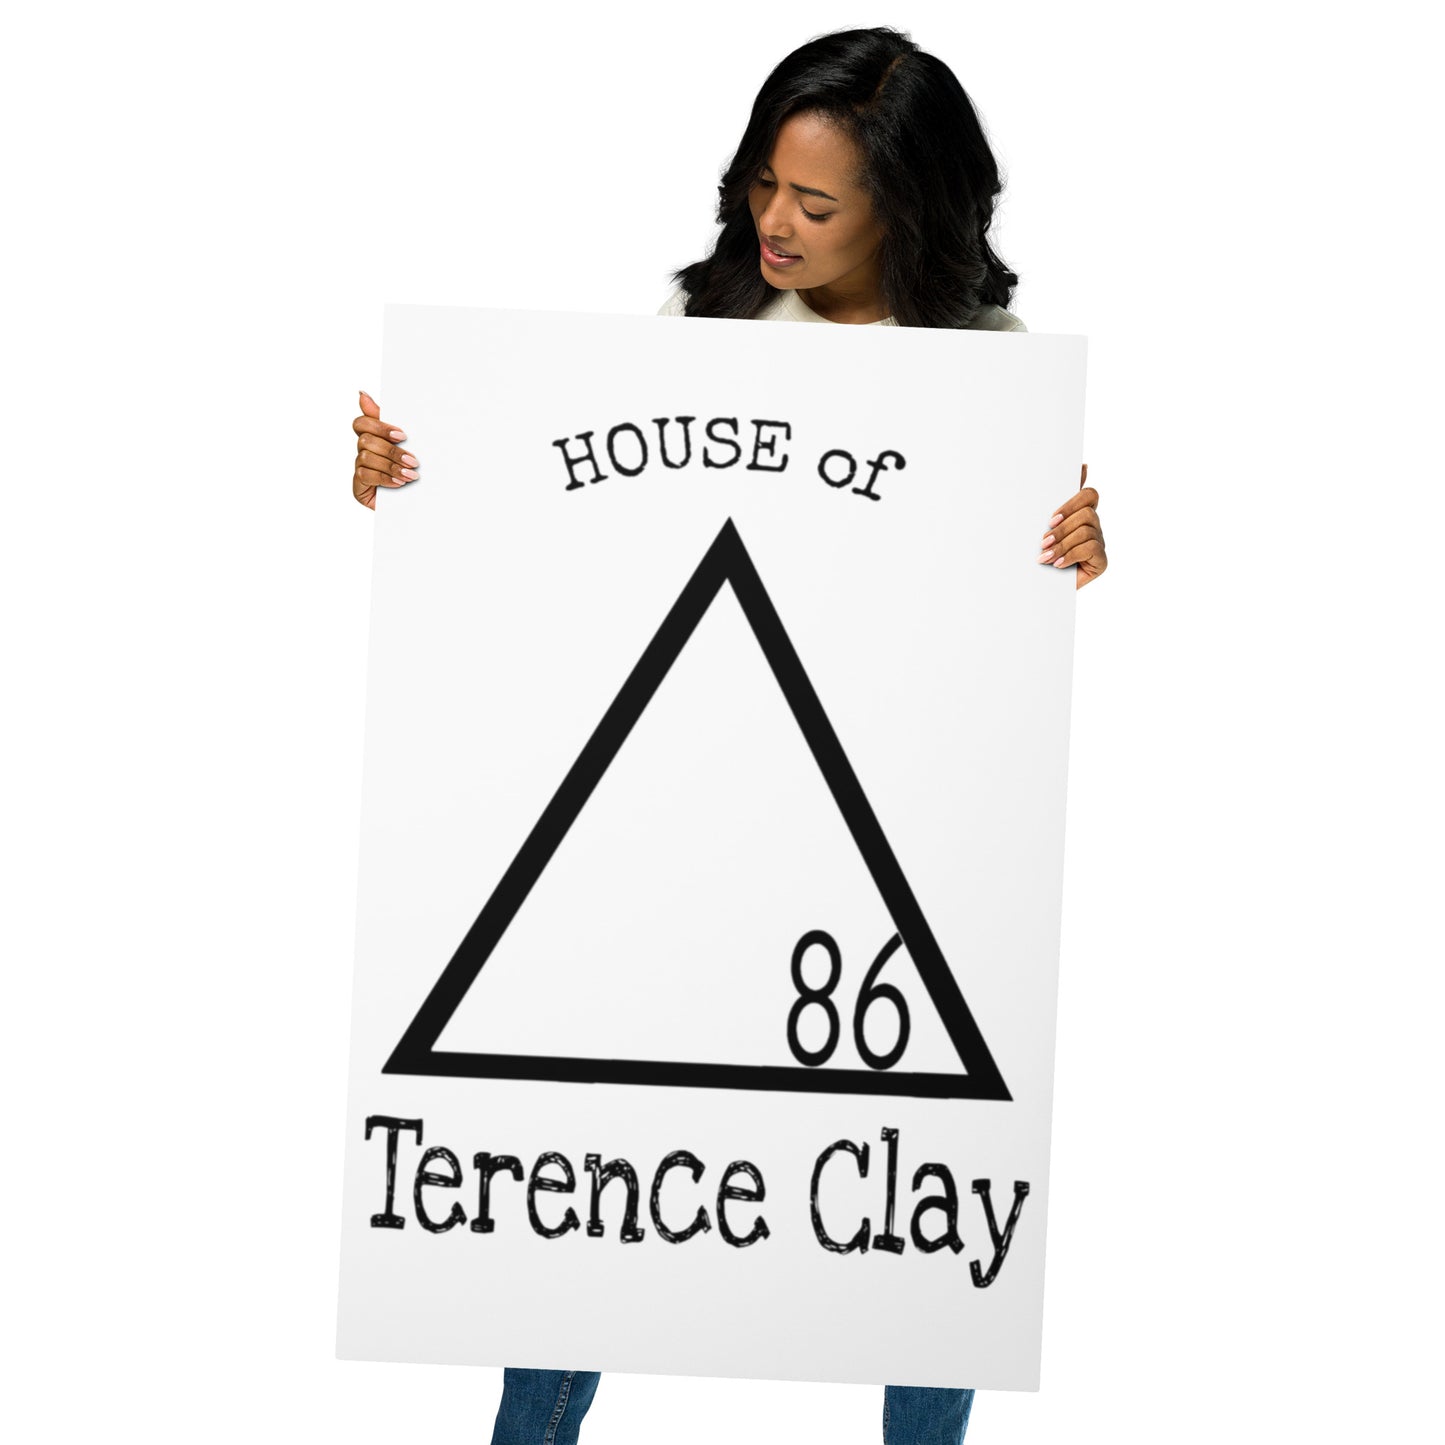 "HOUSE of Terence Clay logo" Metal Print Wall Art